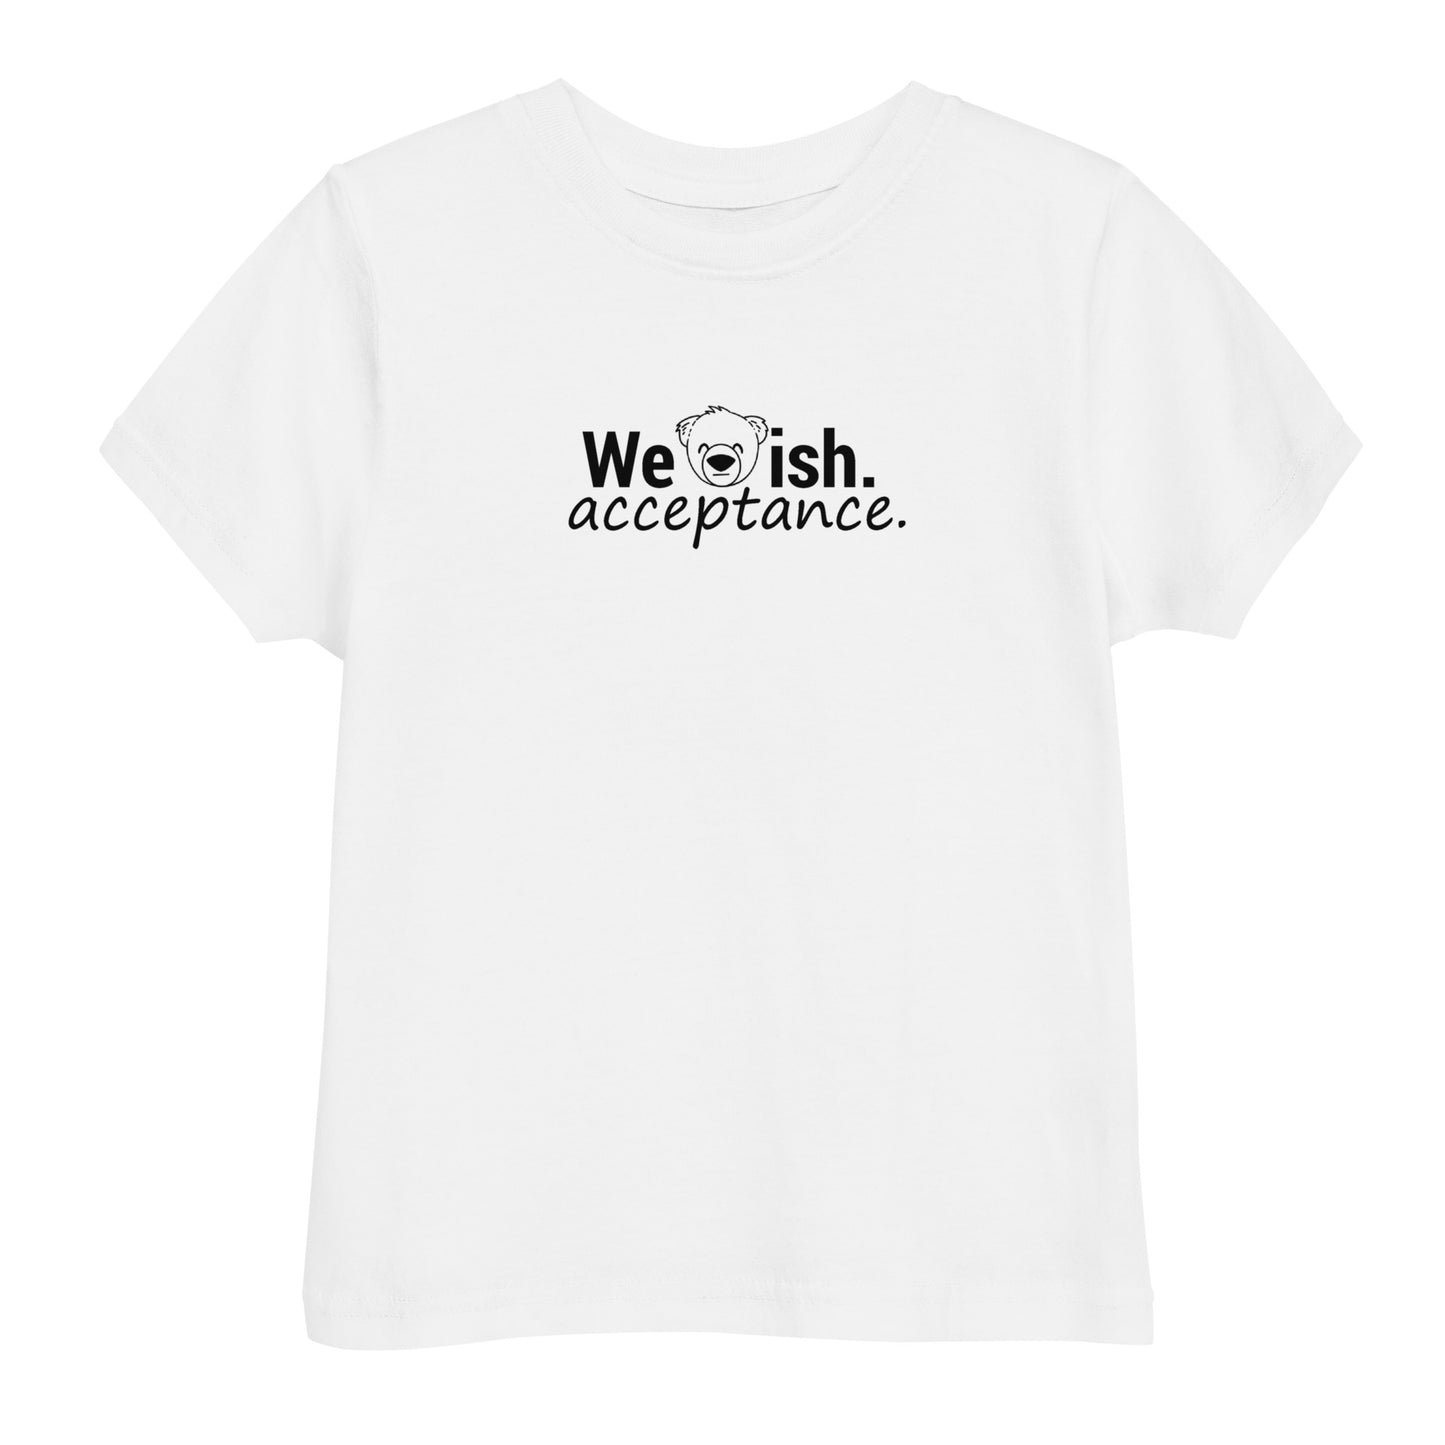 WeBearish Acceptance Toddler Shirt (White)